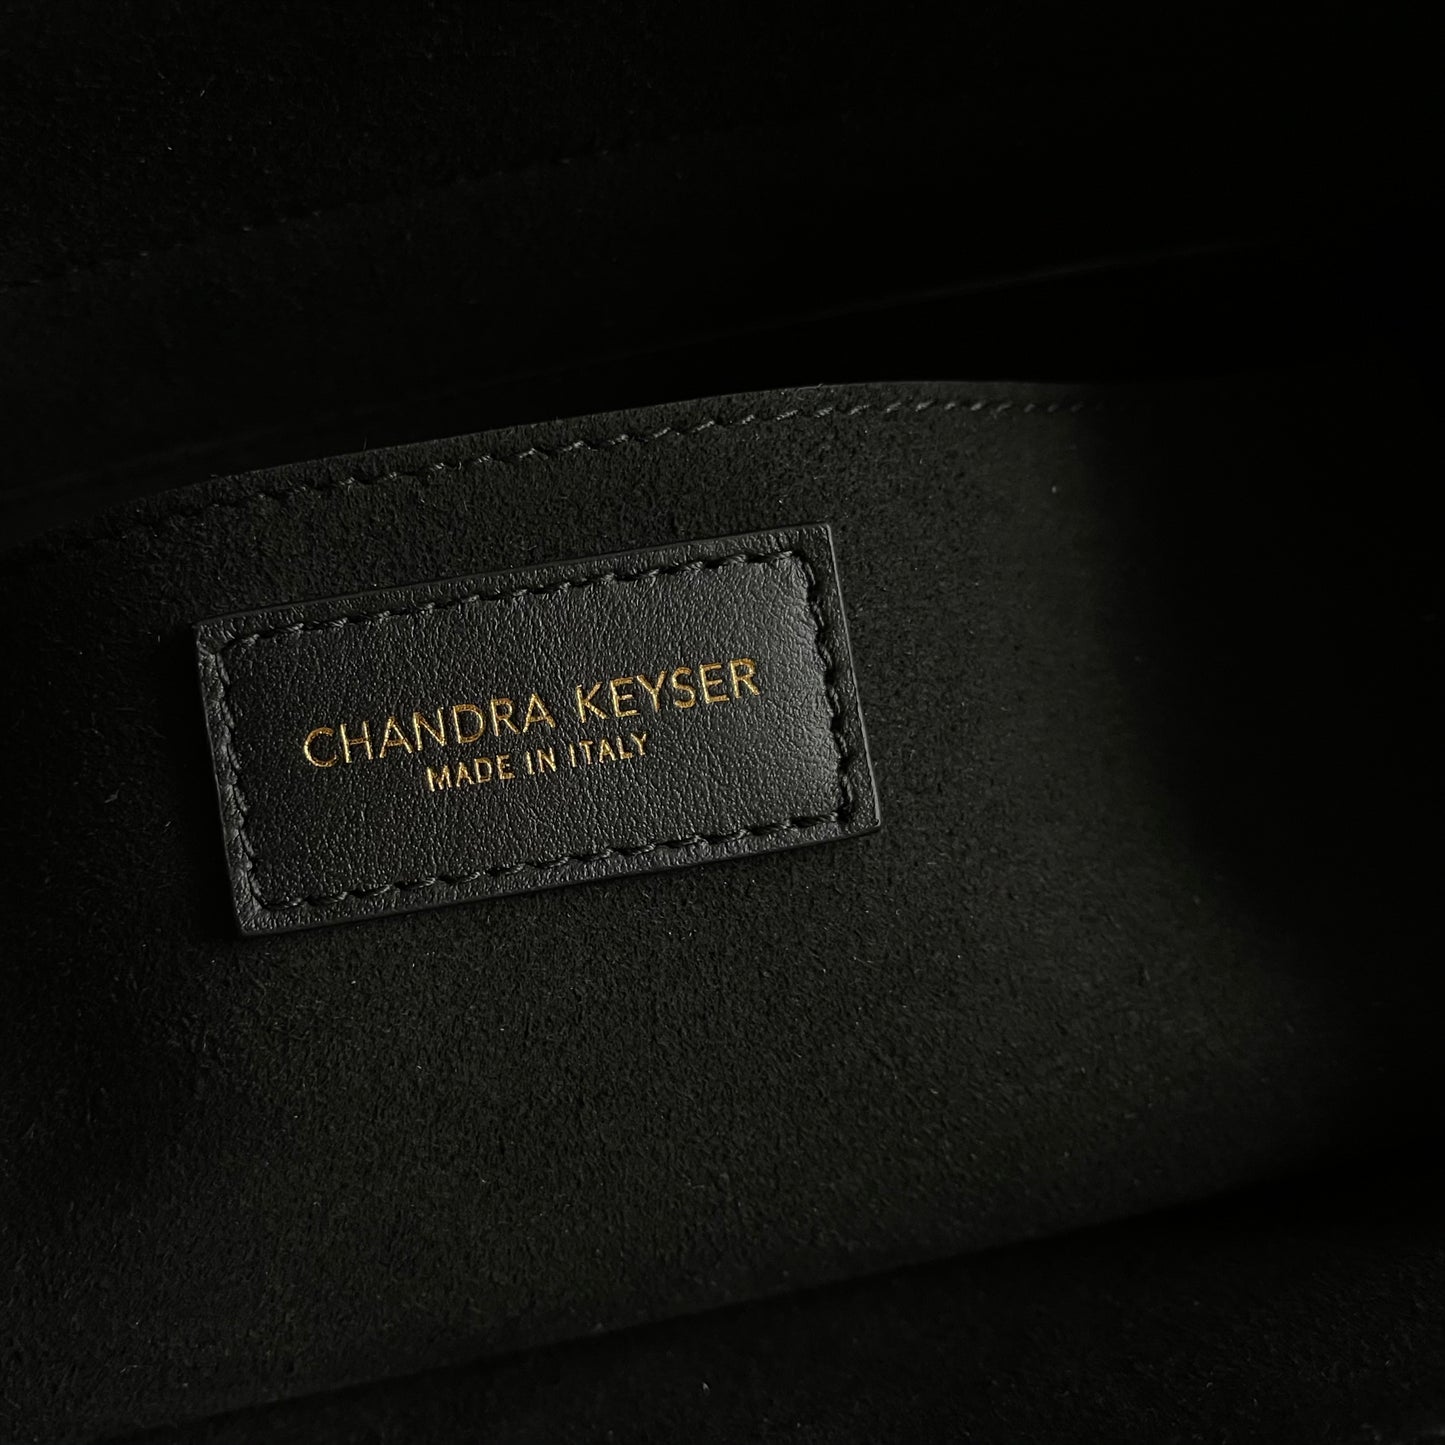 Branded Within, Luxury Designer handbags by Chandra Keyser Made in Italy